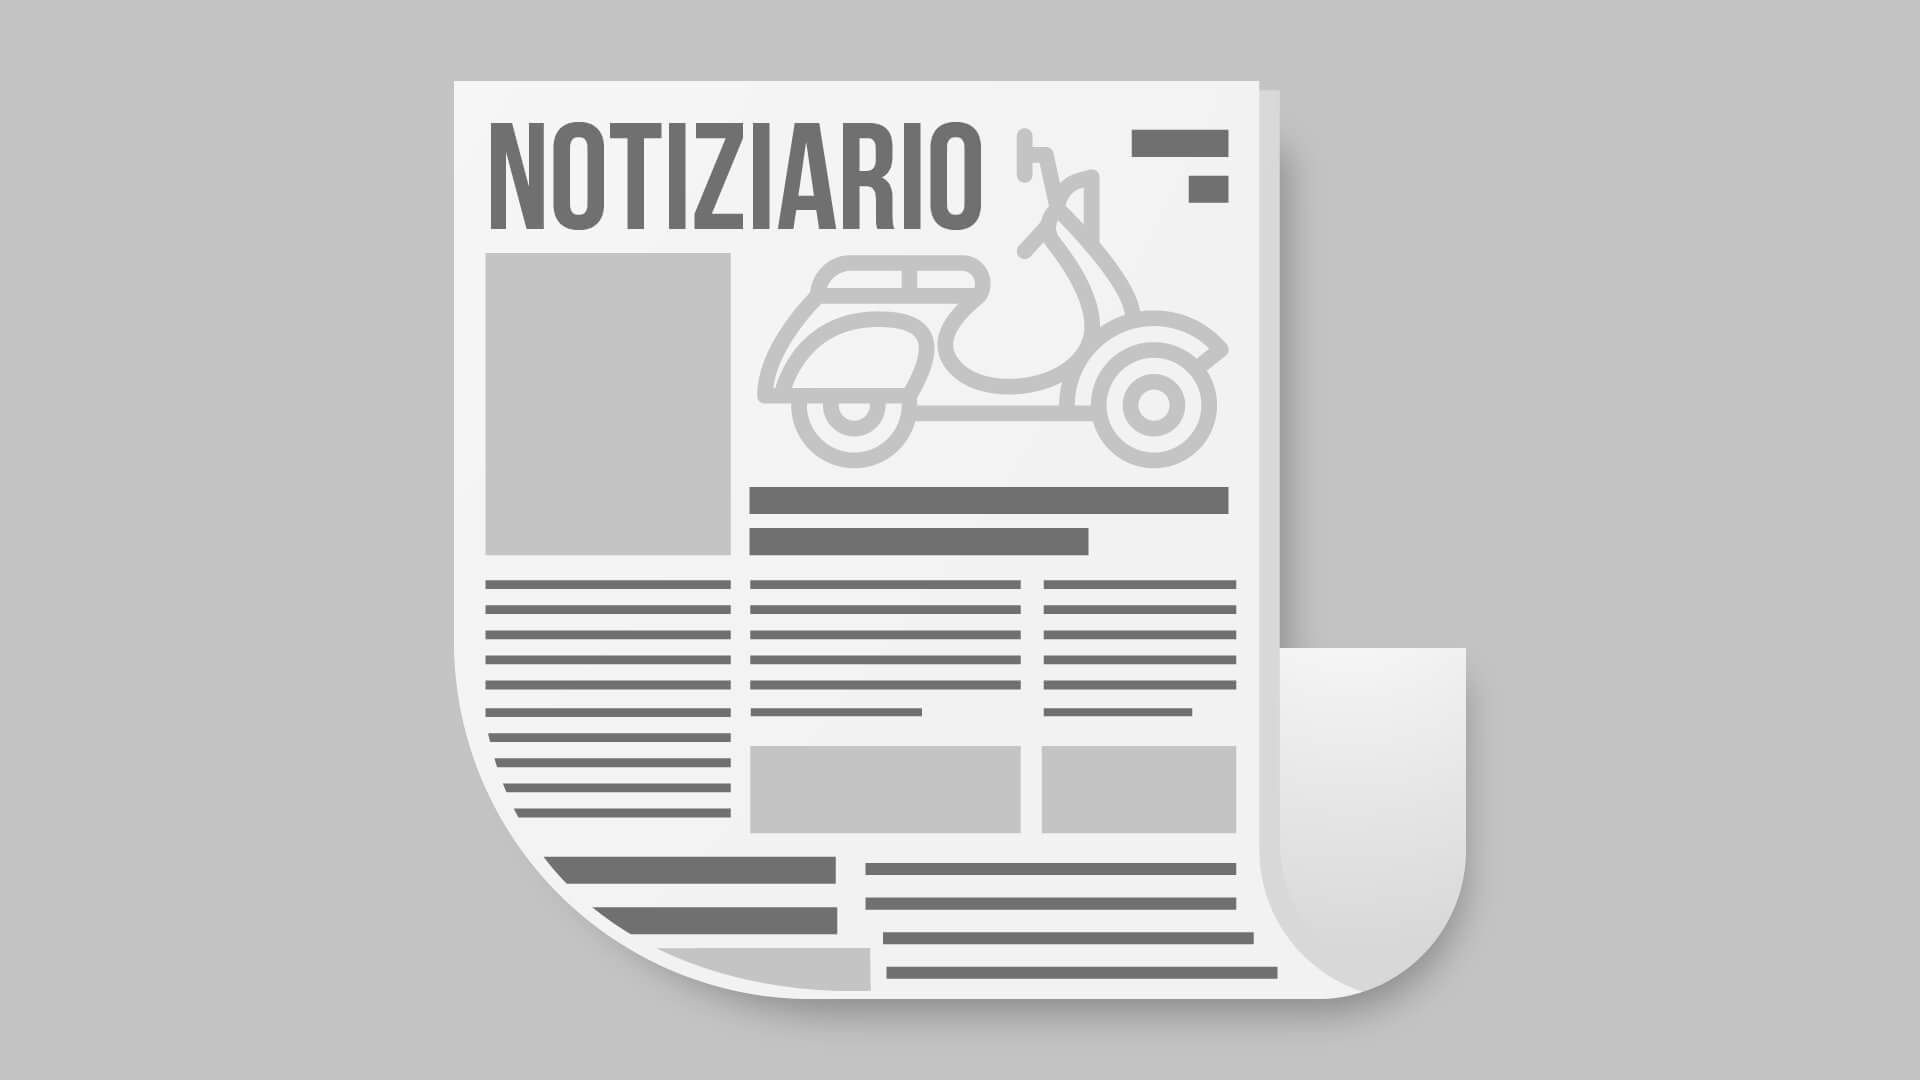 Featured image for “Notiziario n°59 gennaio/aprile 2017”